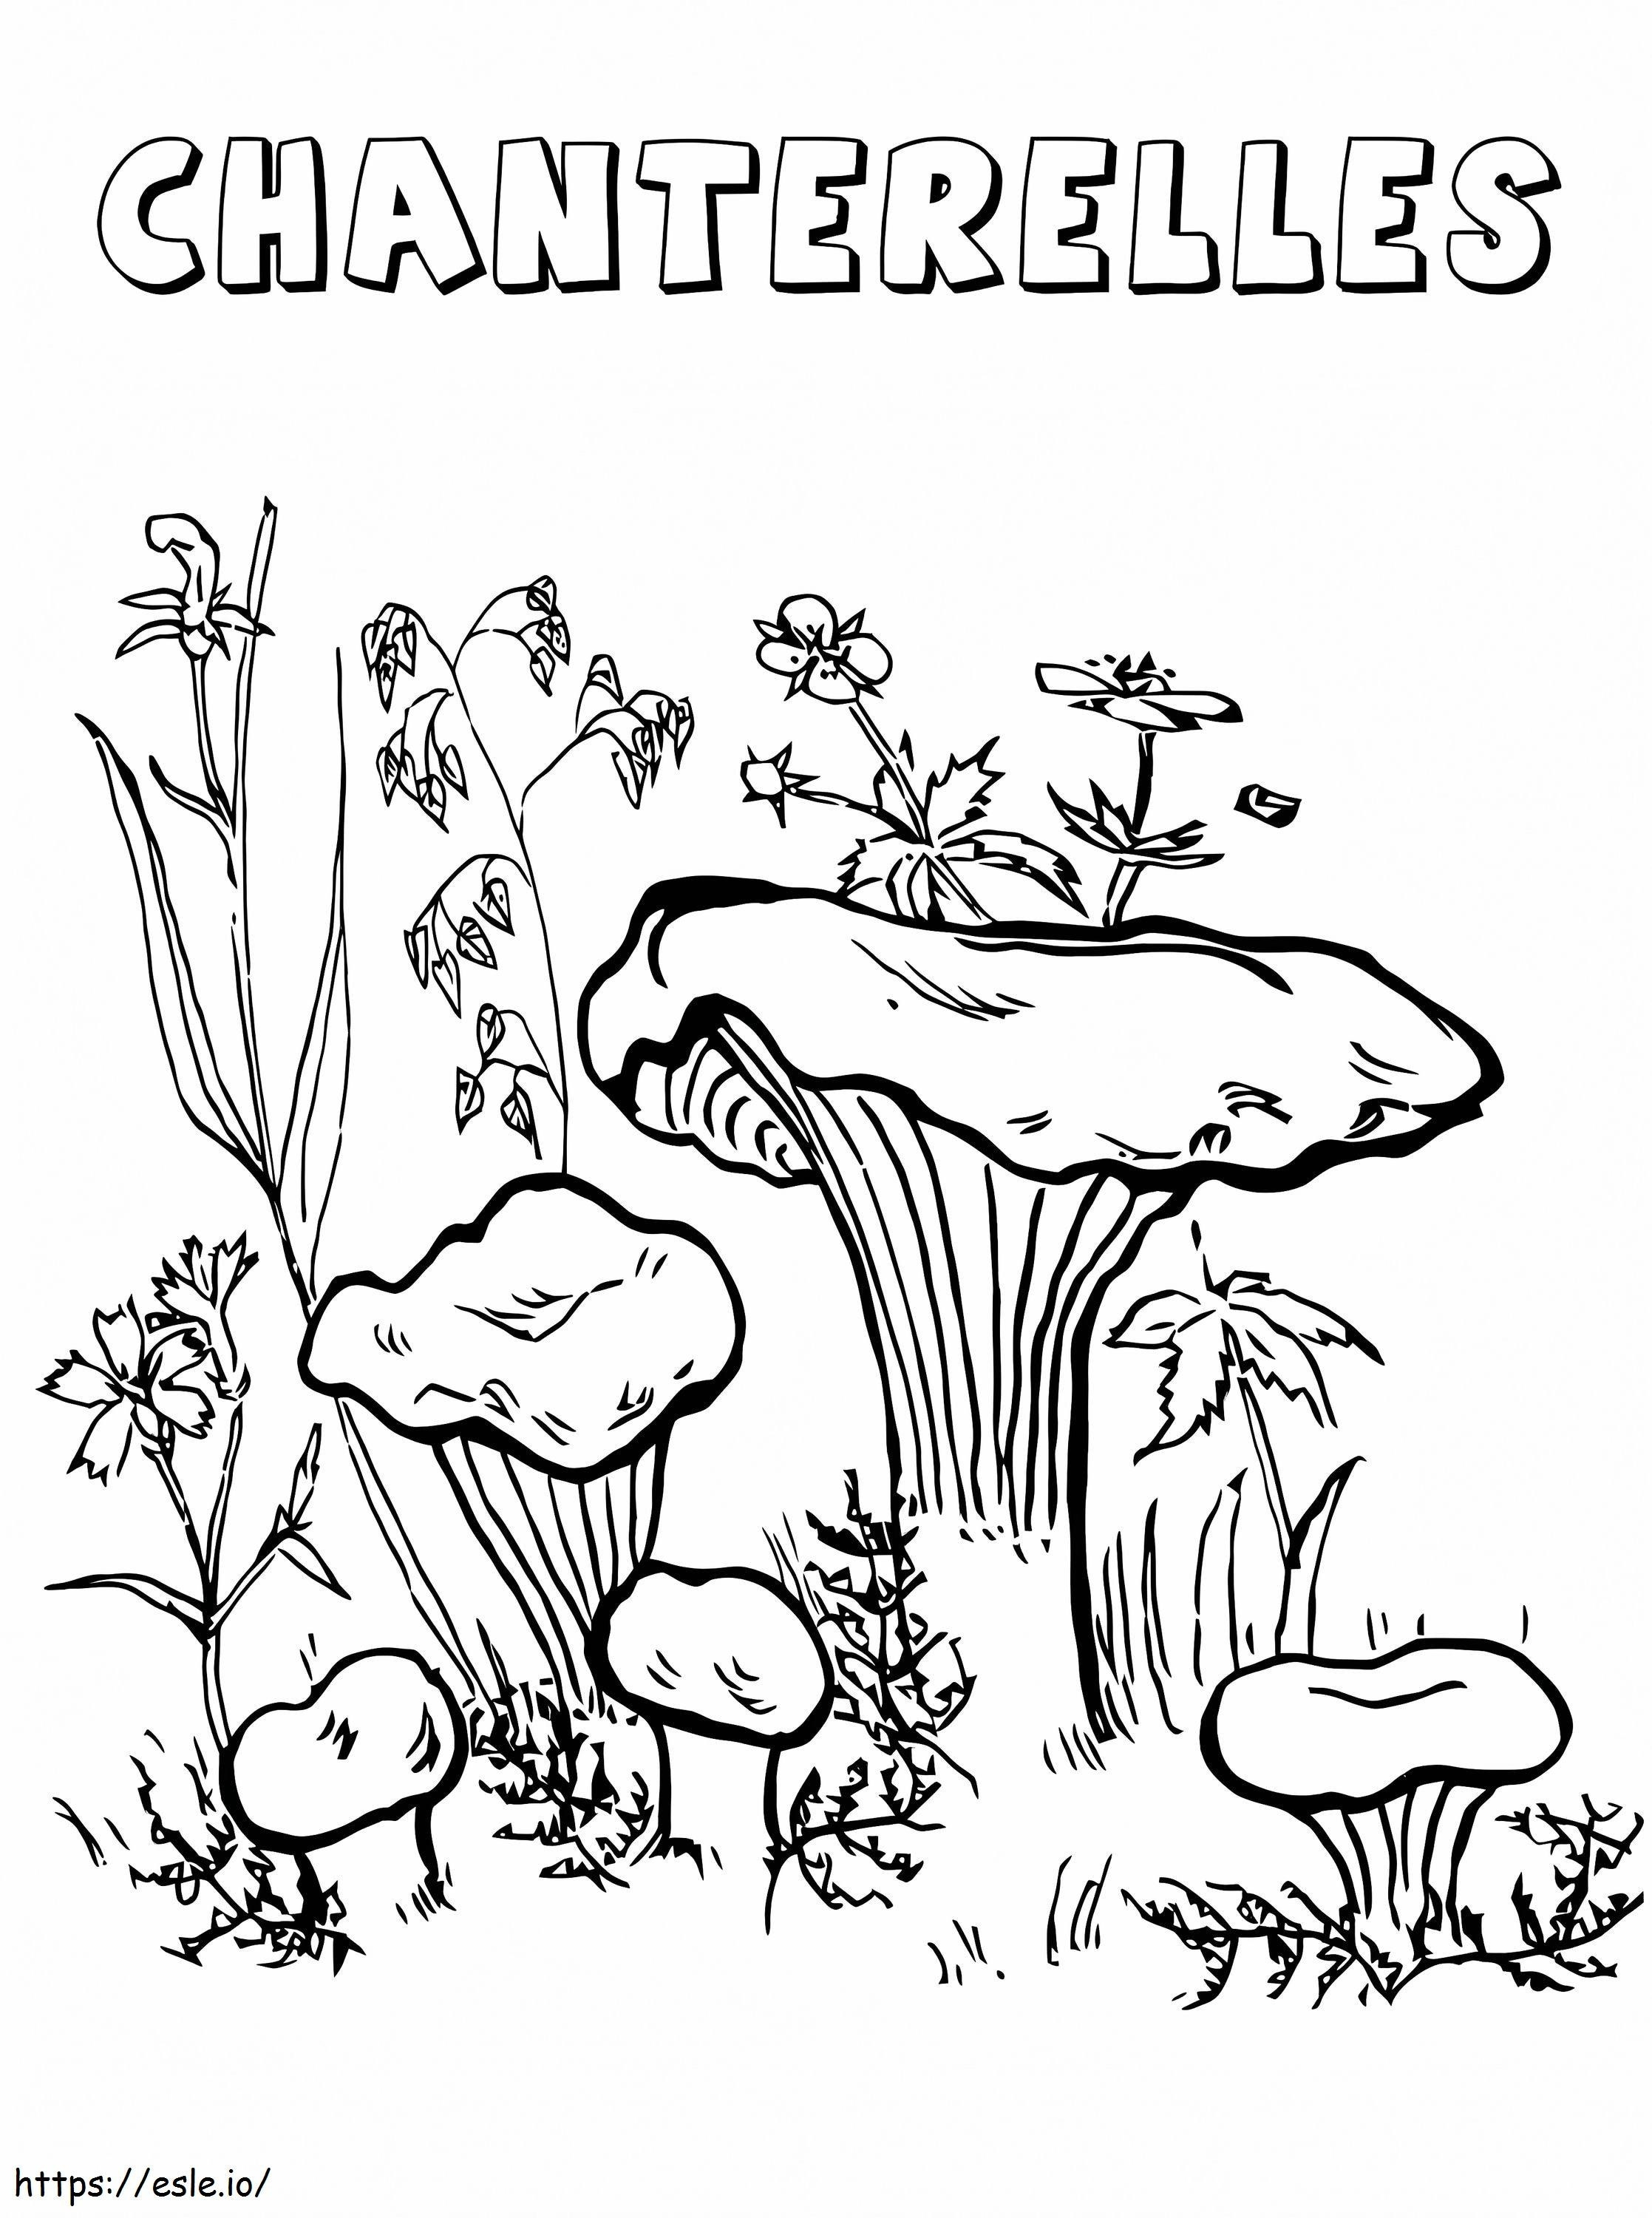 Chanterelles Mushrooms coloring page